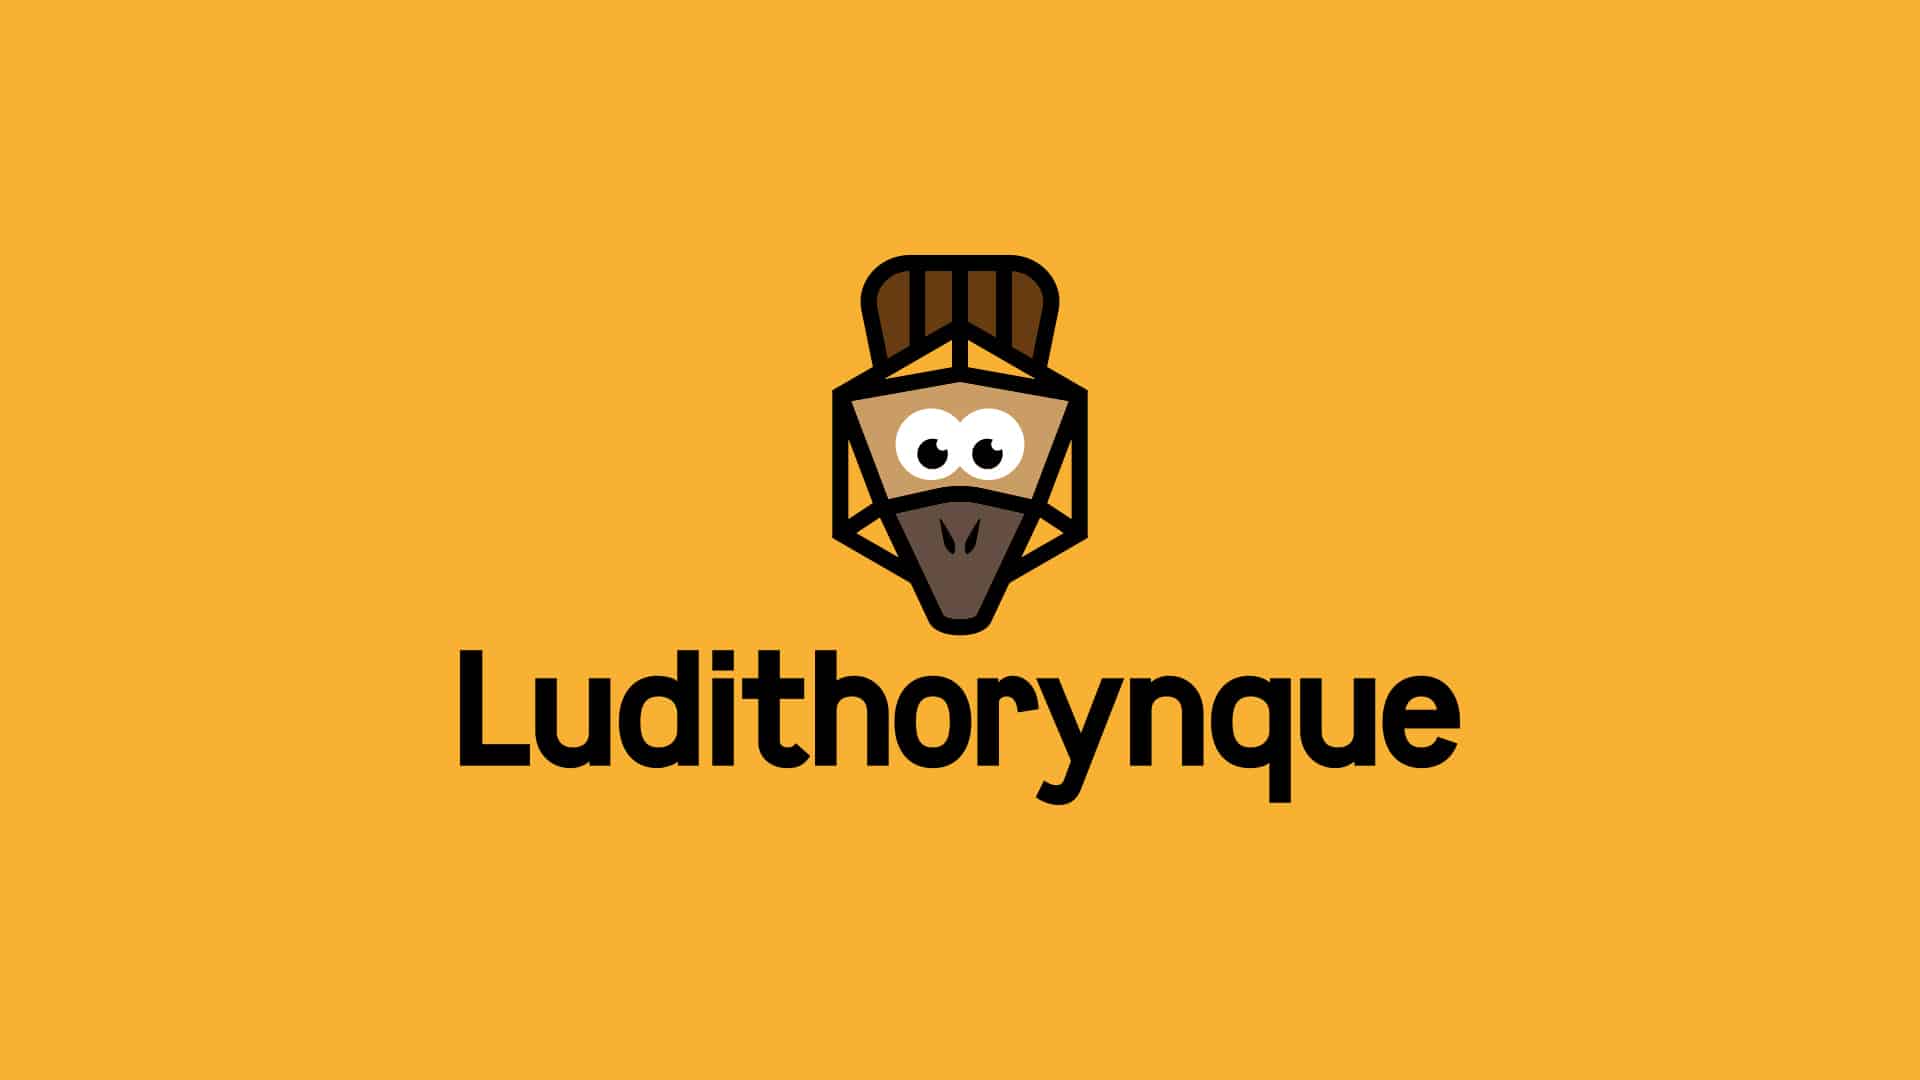 ludithorynque logo boutique